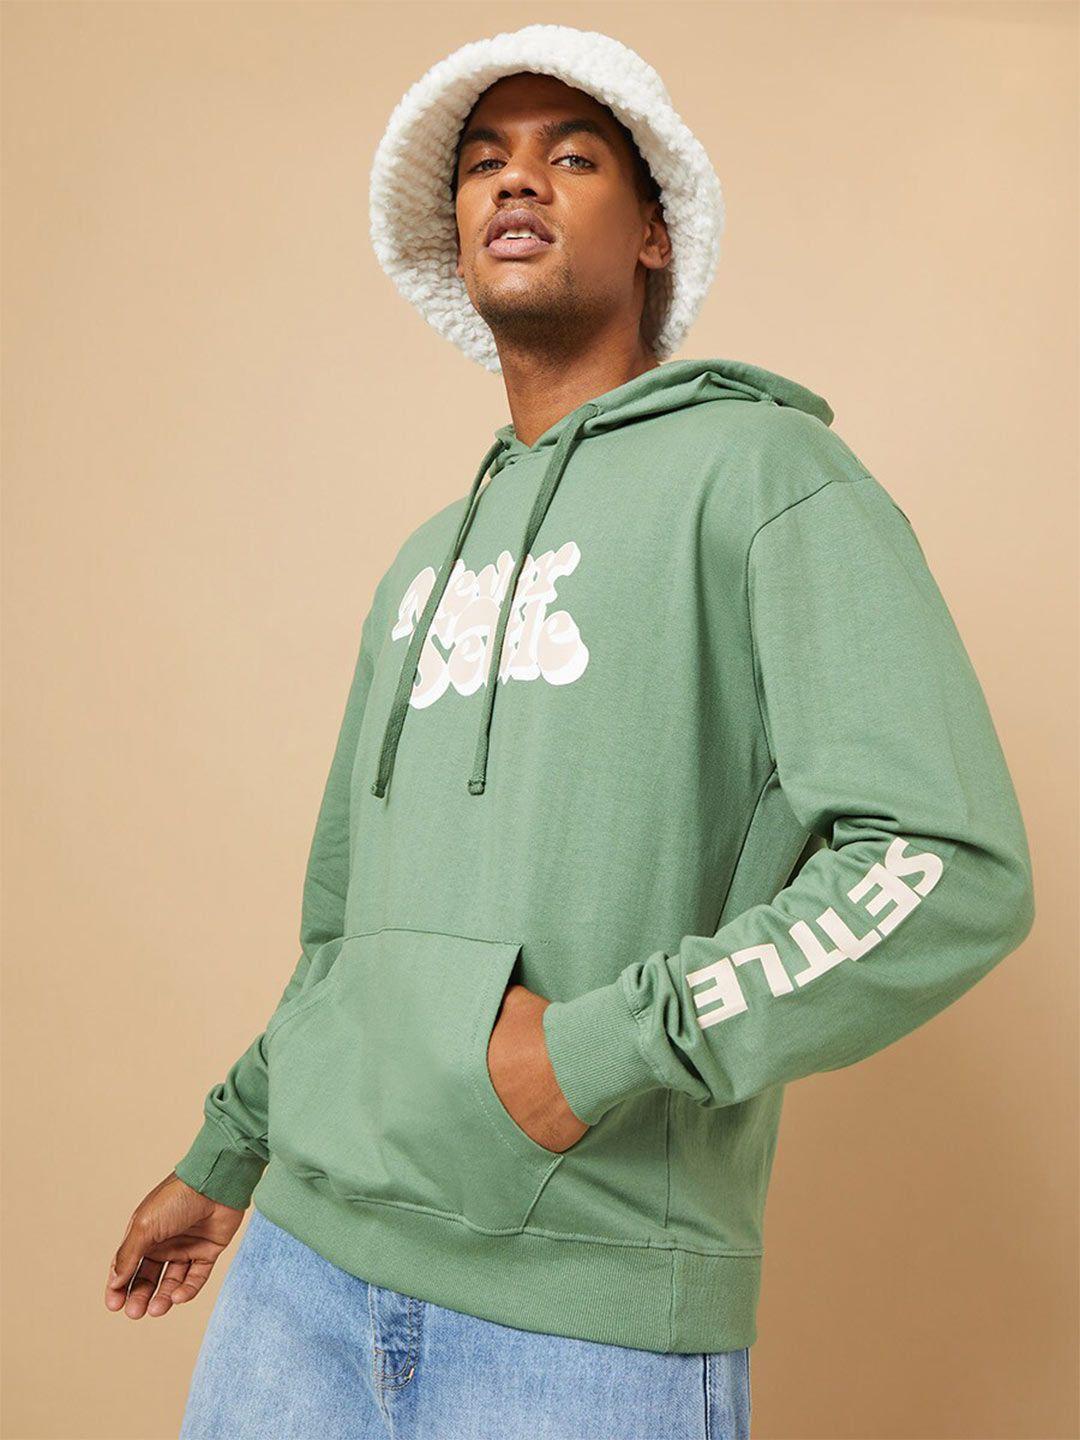 styli-men-green-cotton-printed-hooded-sweatshirt